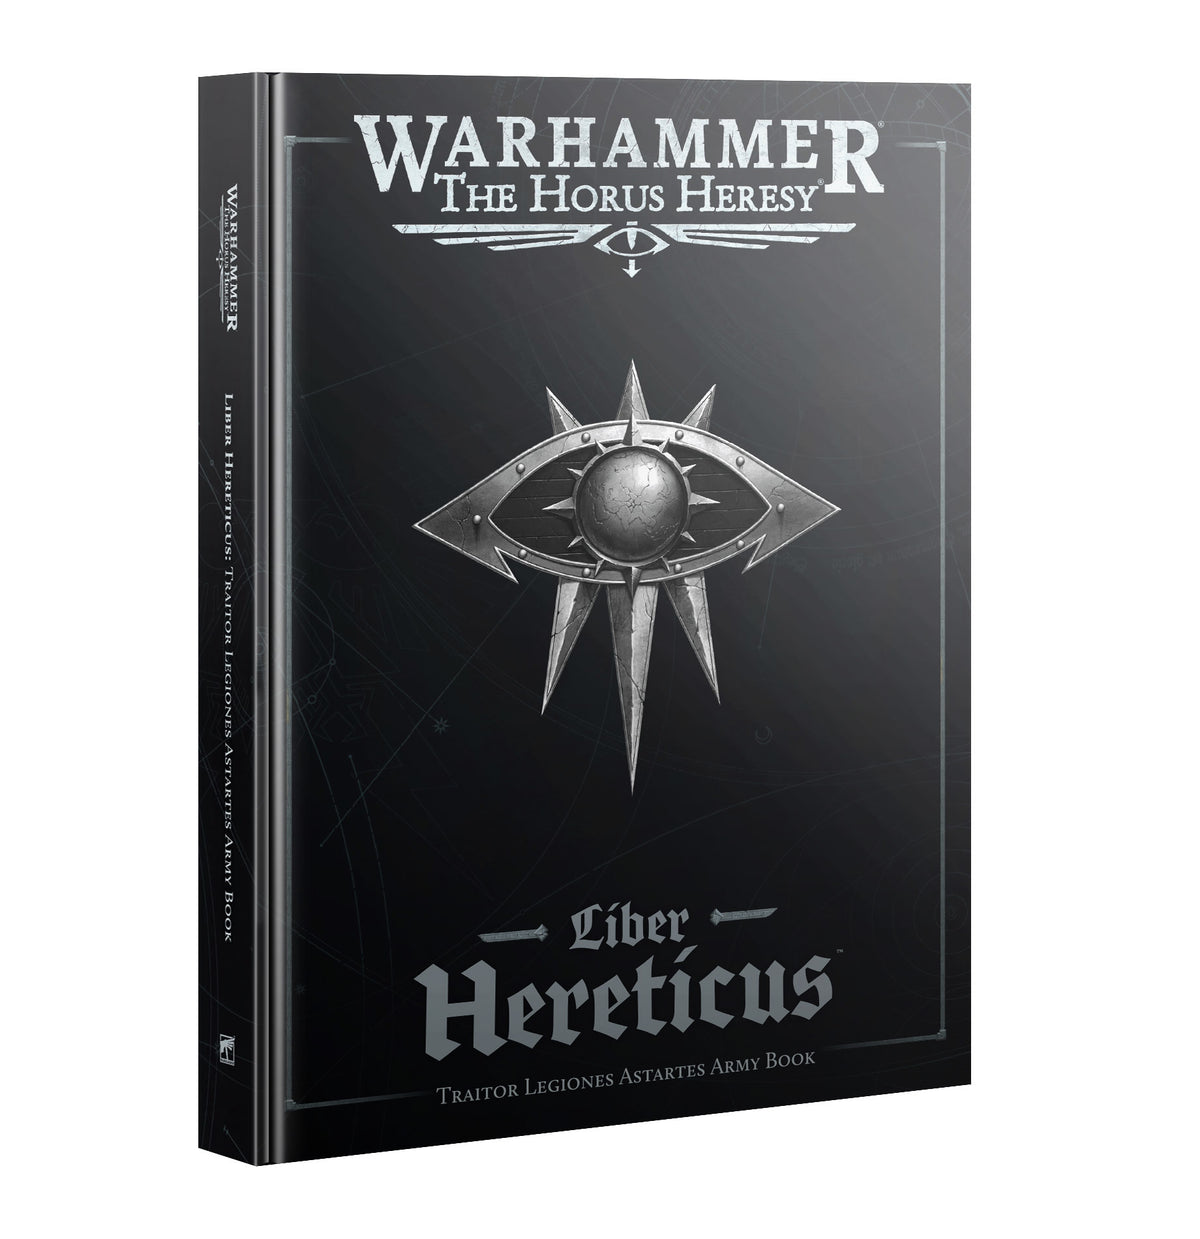 Liber Hereticus - Traitor Legiones Astartes Army Book (Warhammer: The Horus Heresy)